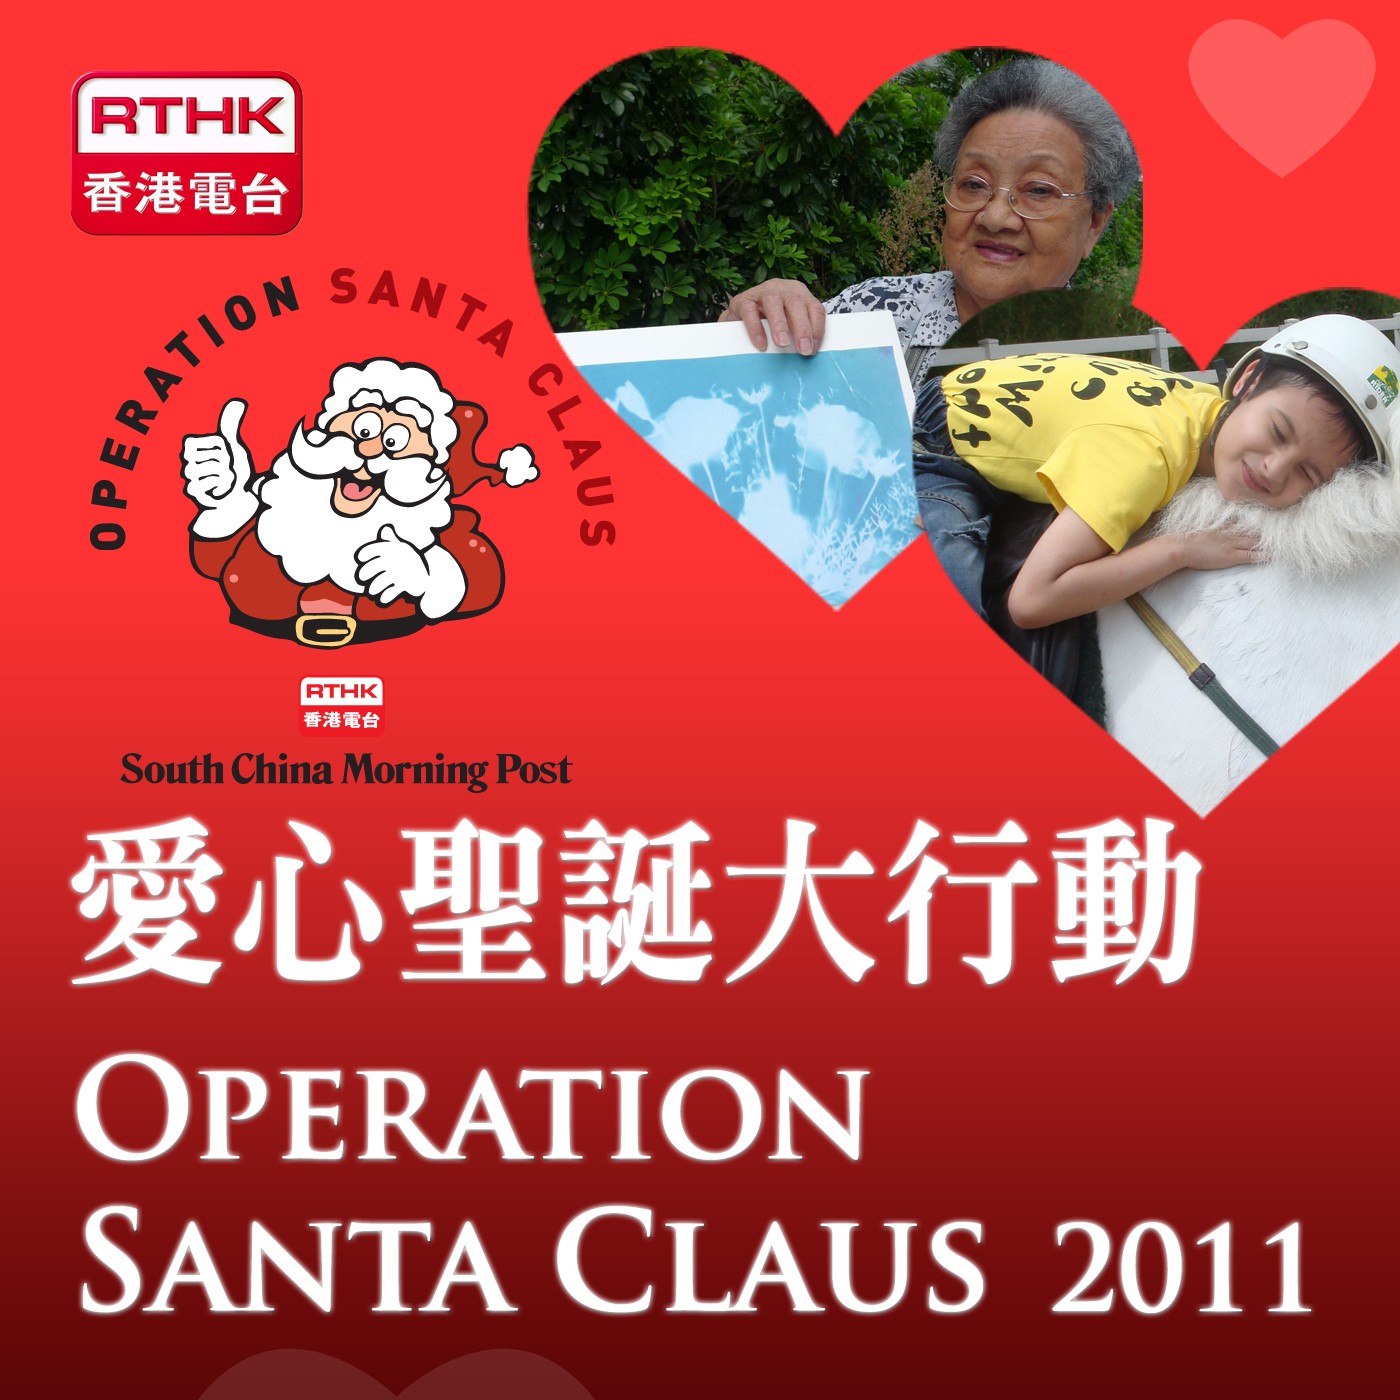 RTHK:Operation Santa Claus 2011